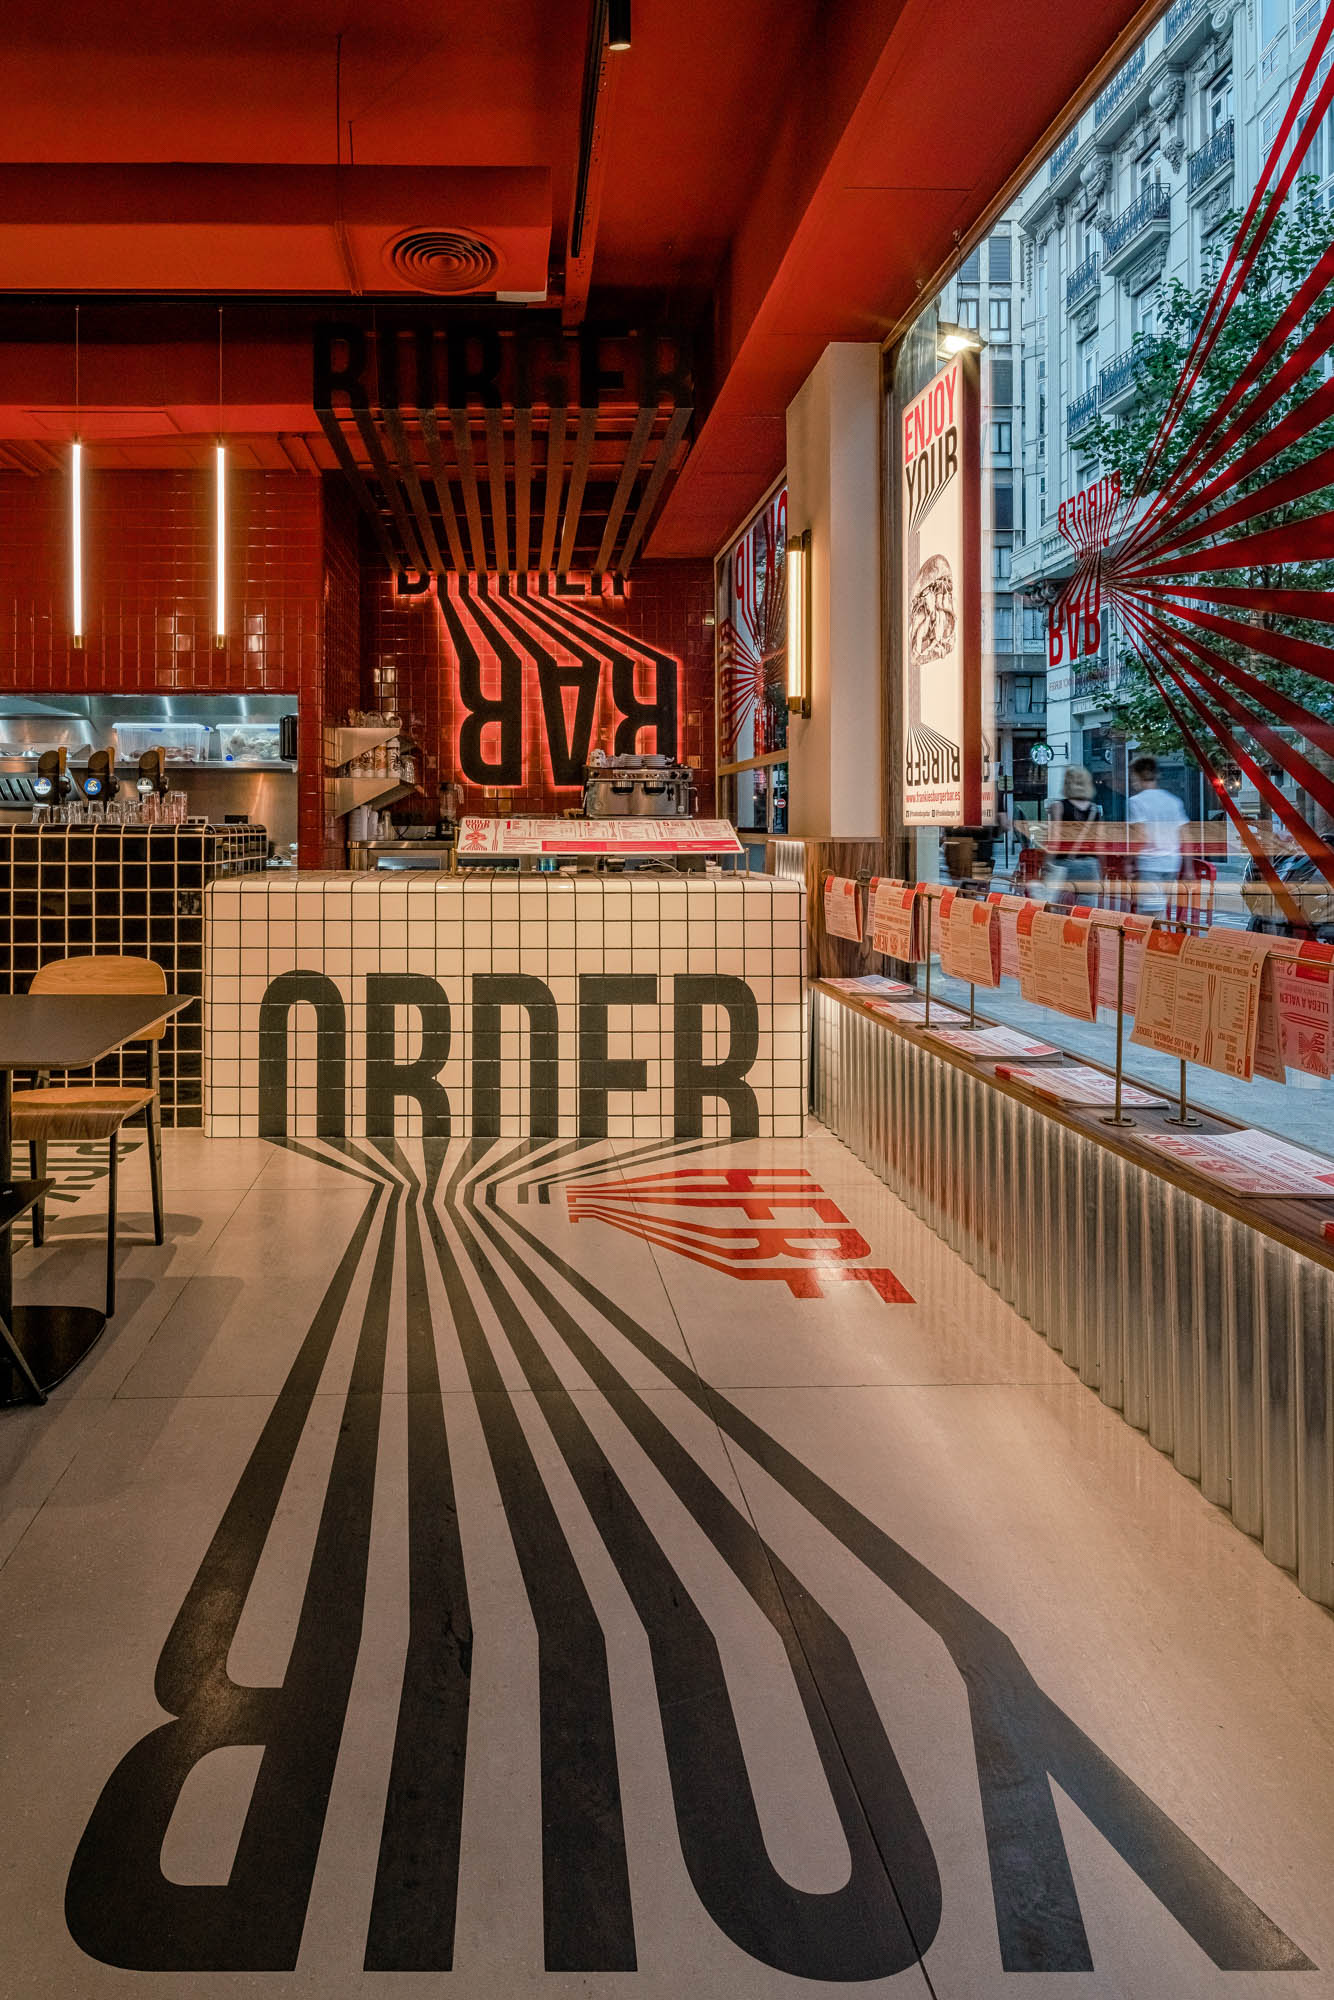 Proyecto diseño restaurante Frankie's Burger Bar